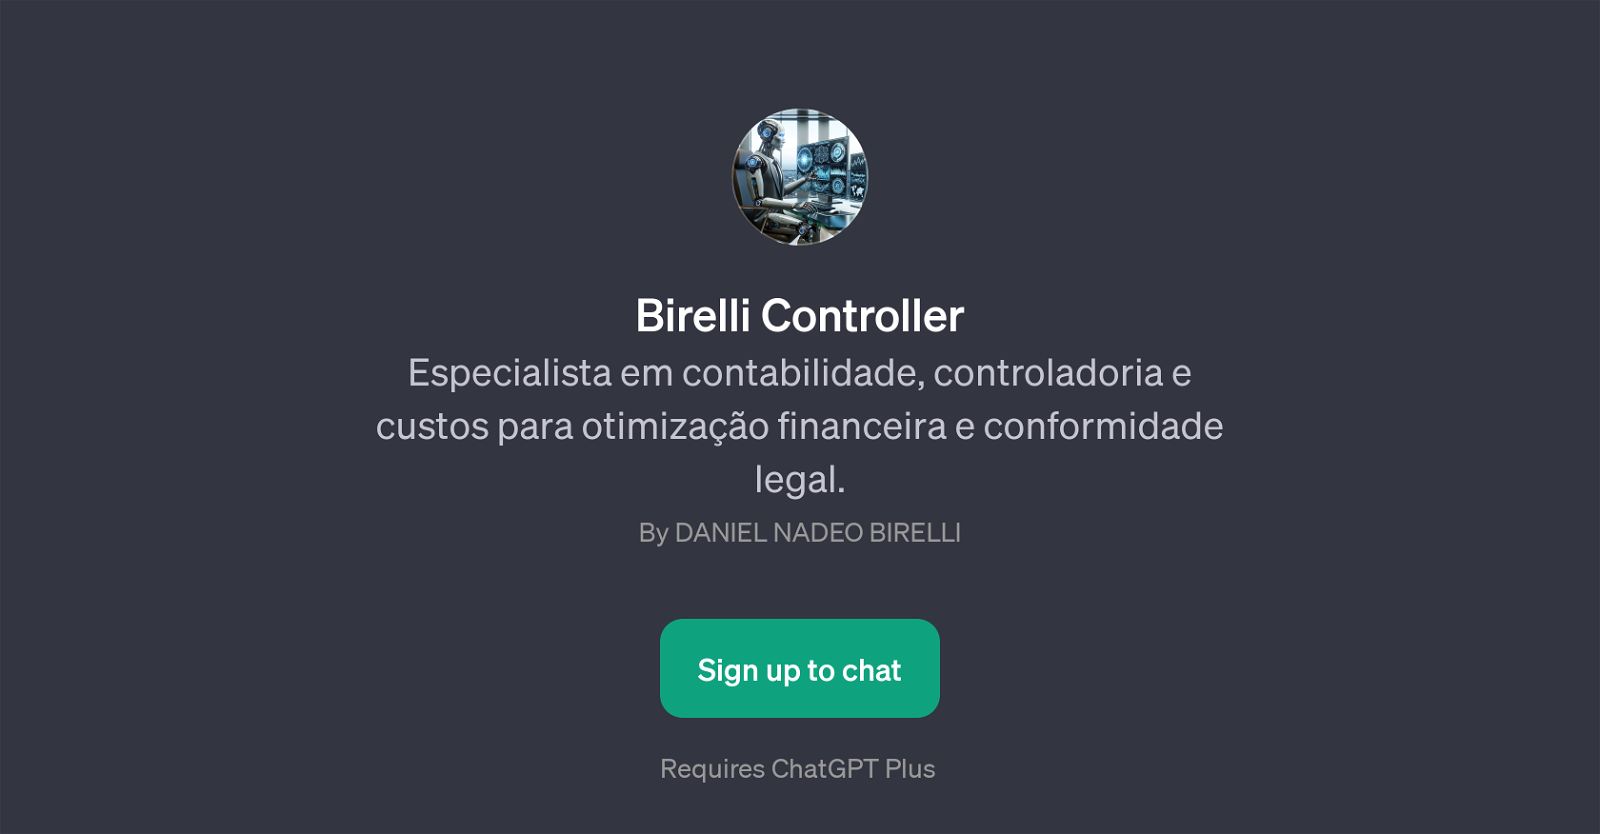 Birelli Controller website